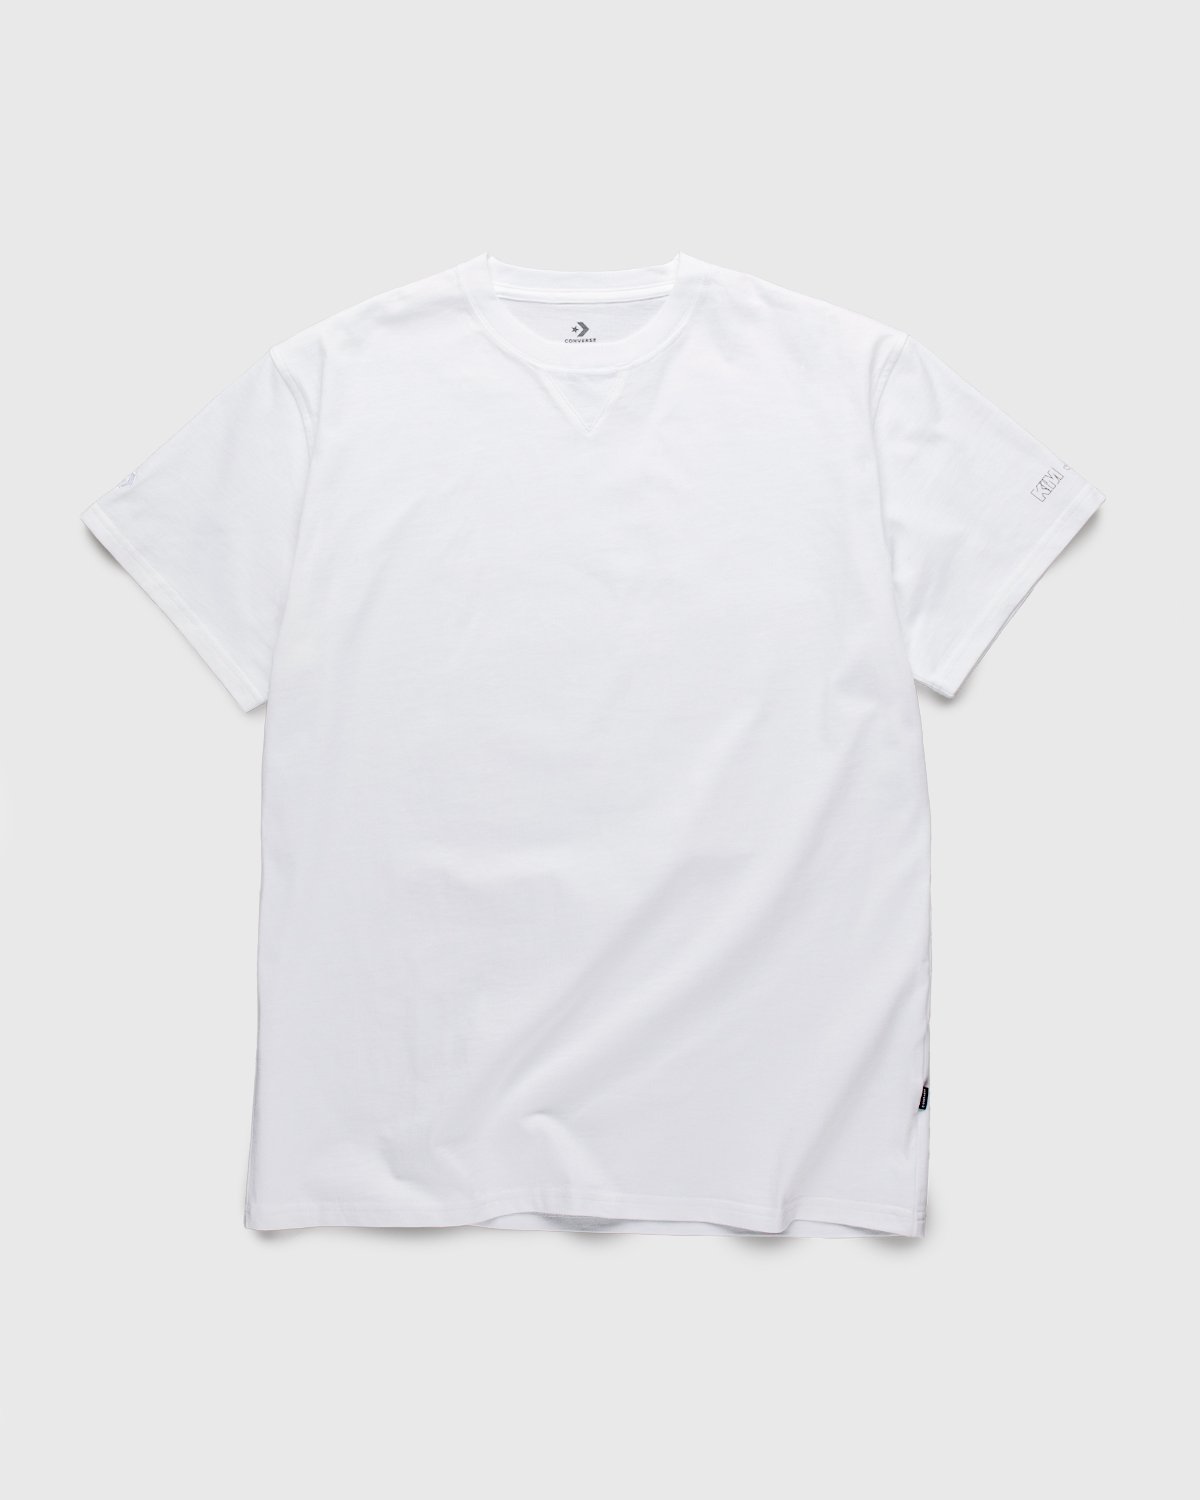 Converse x Kim Jones - T-Shirt White - Clothing - White - Image 1